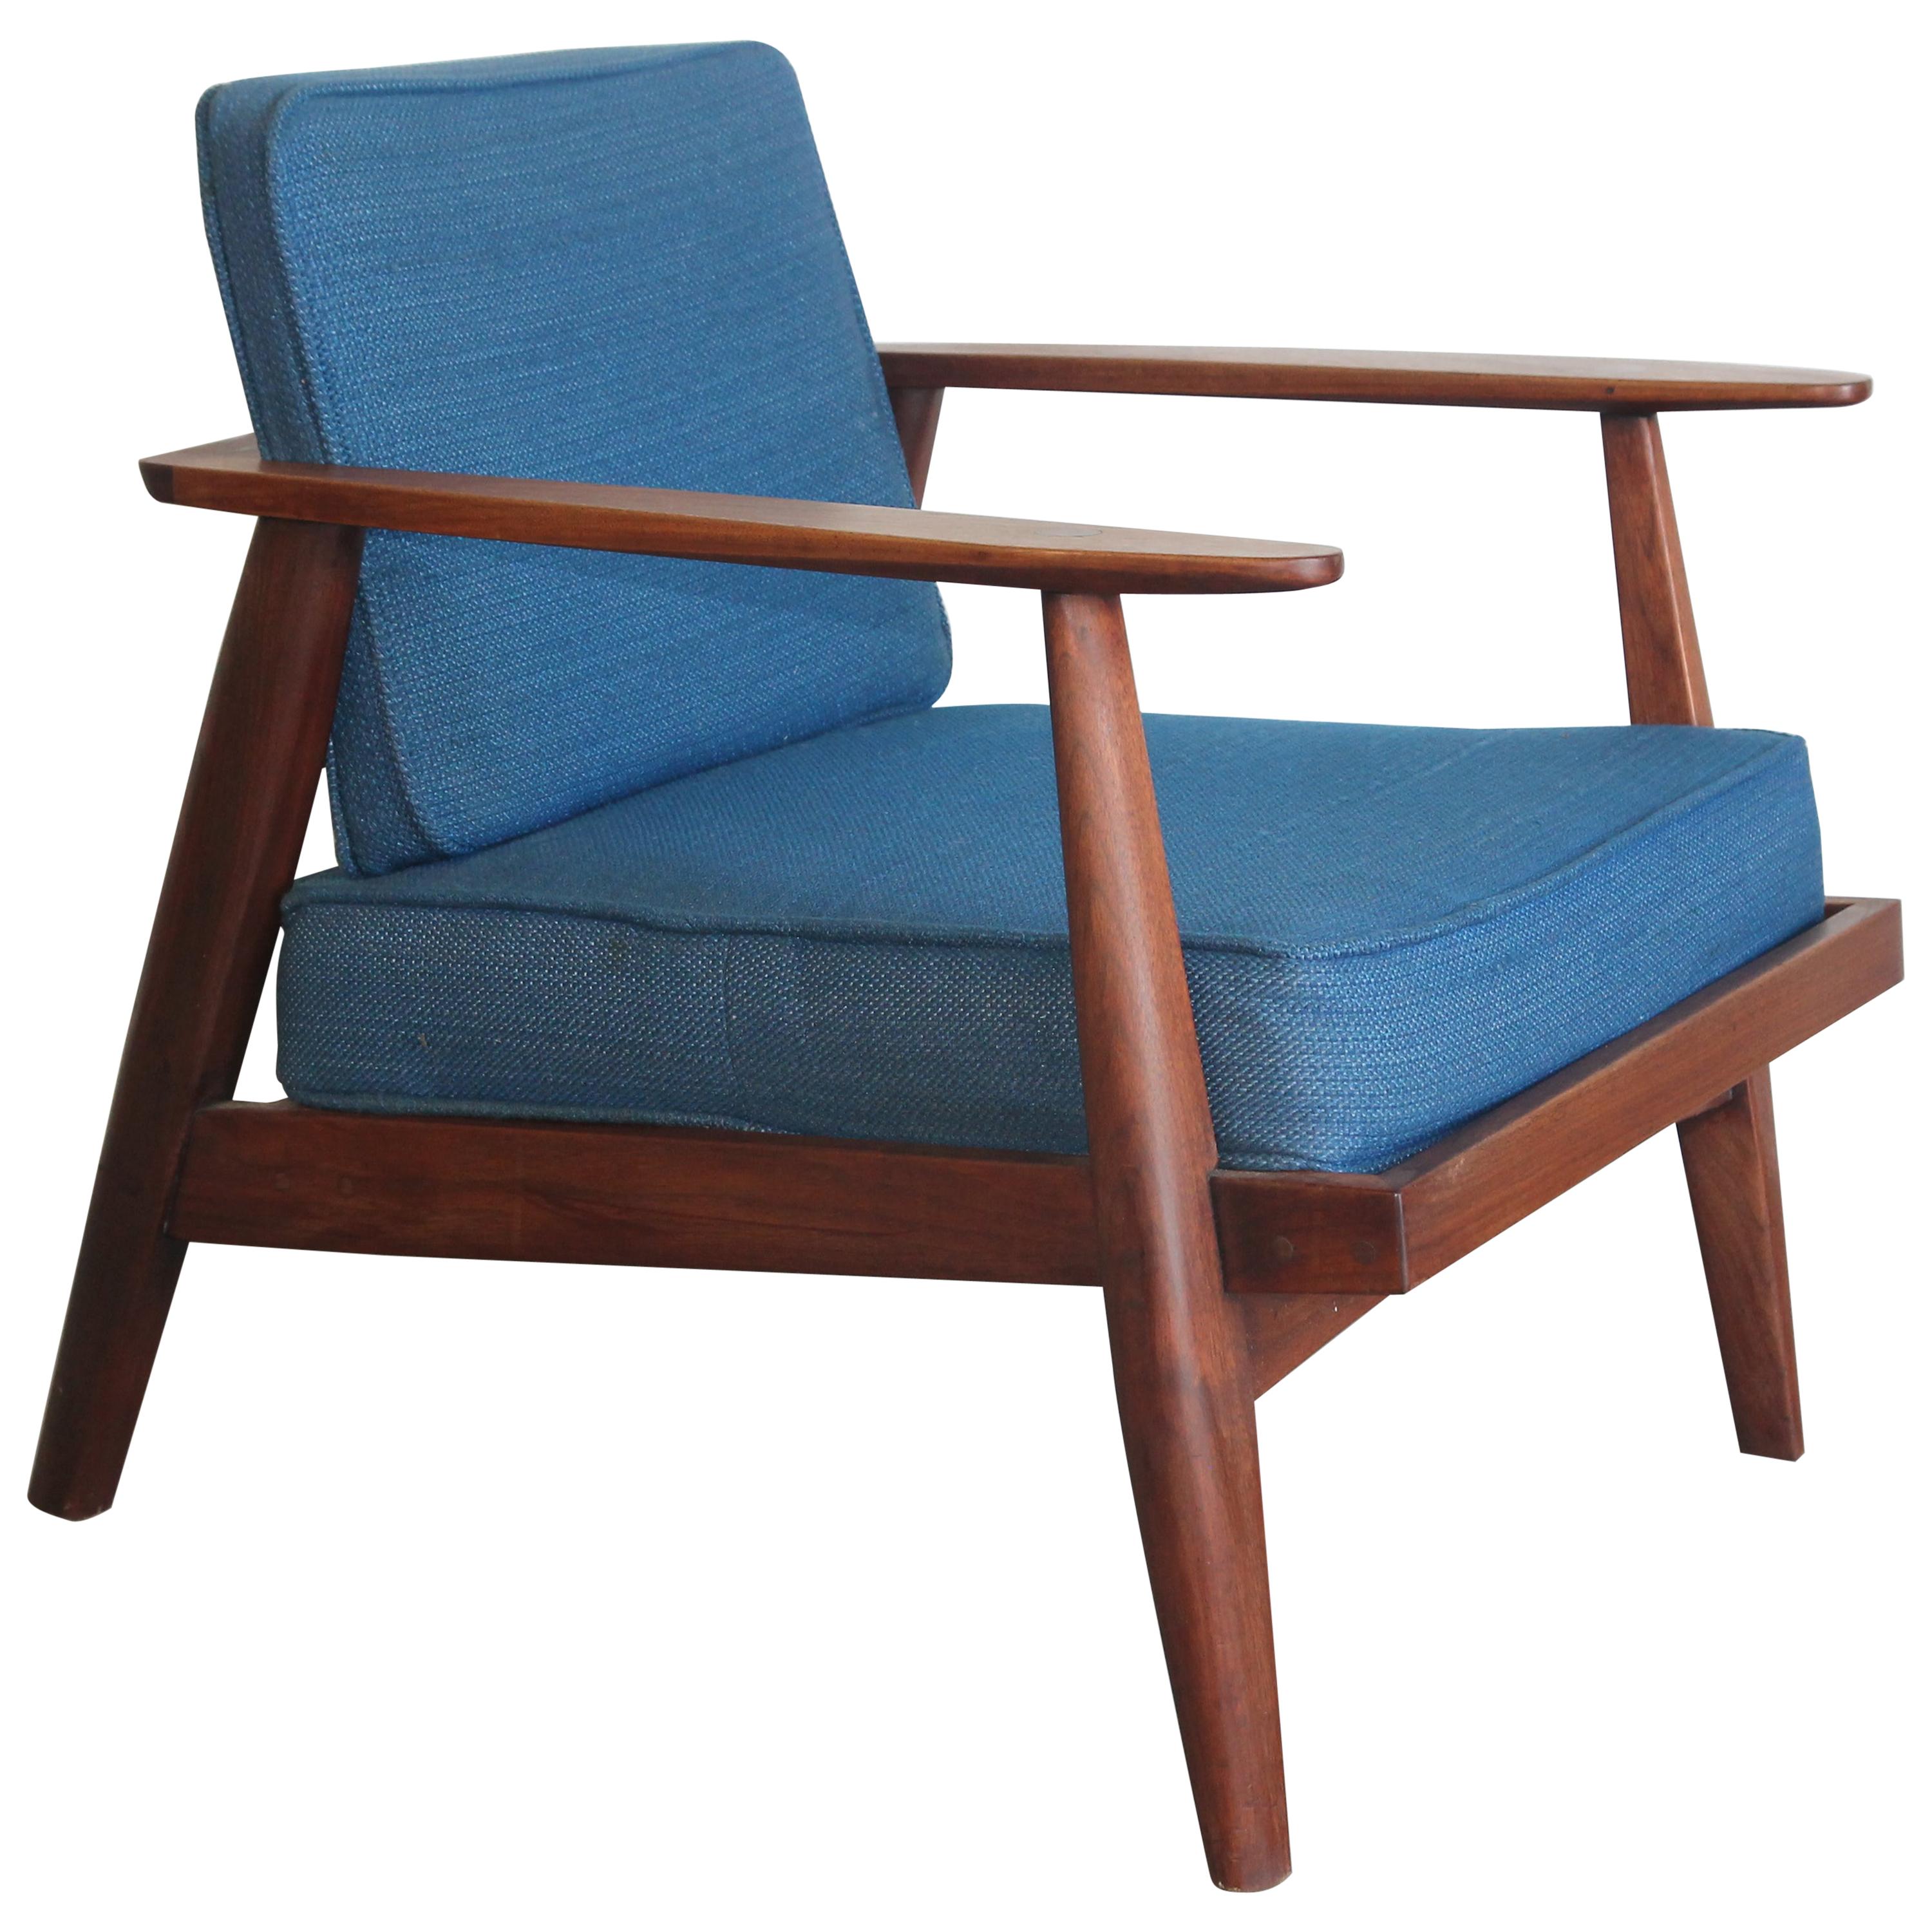 Studio Designed Midcentury Lounge Chair